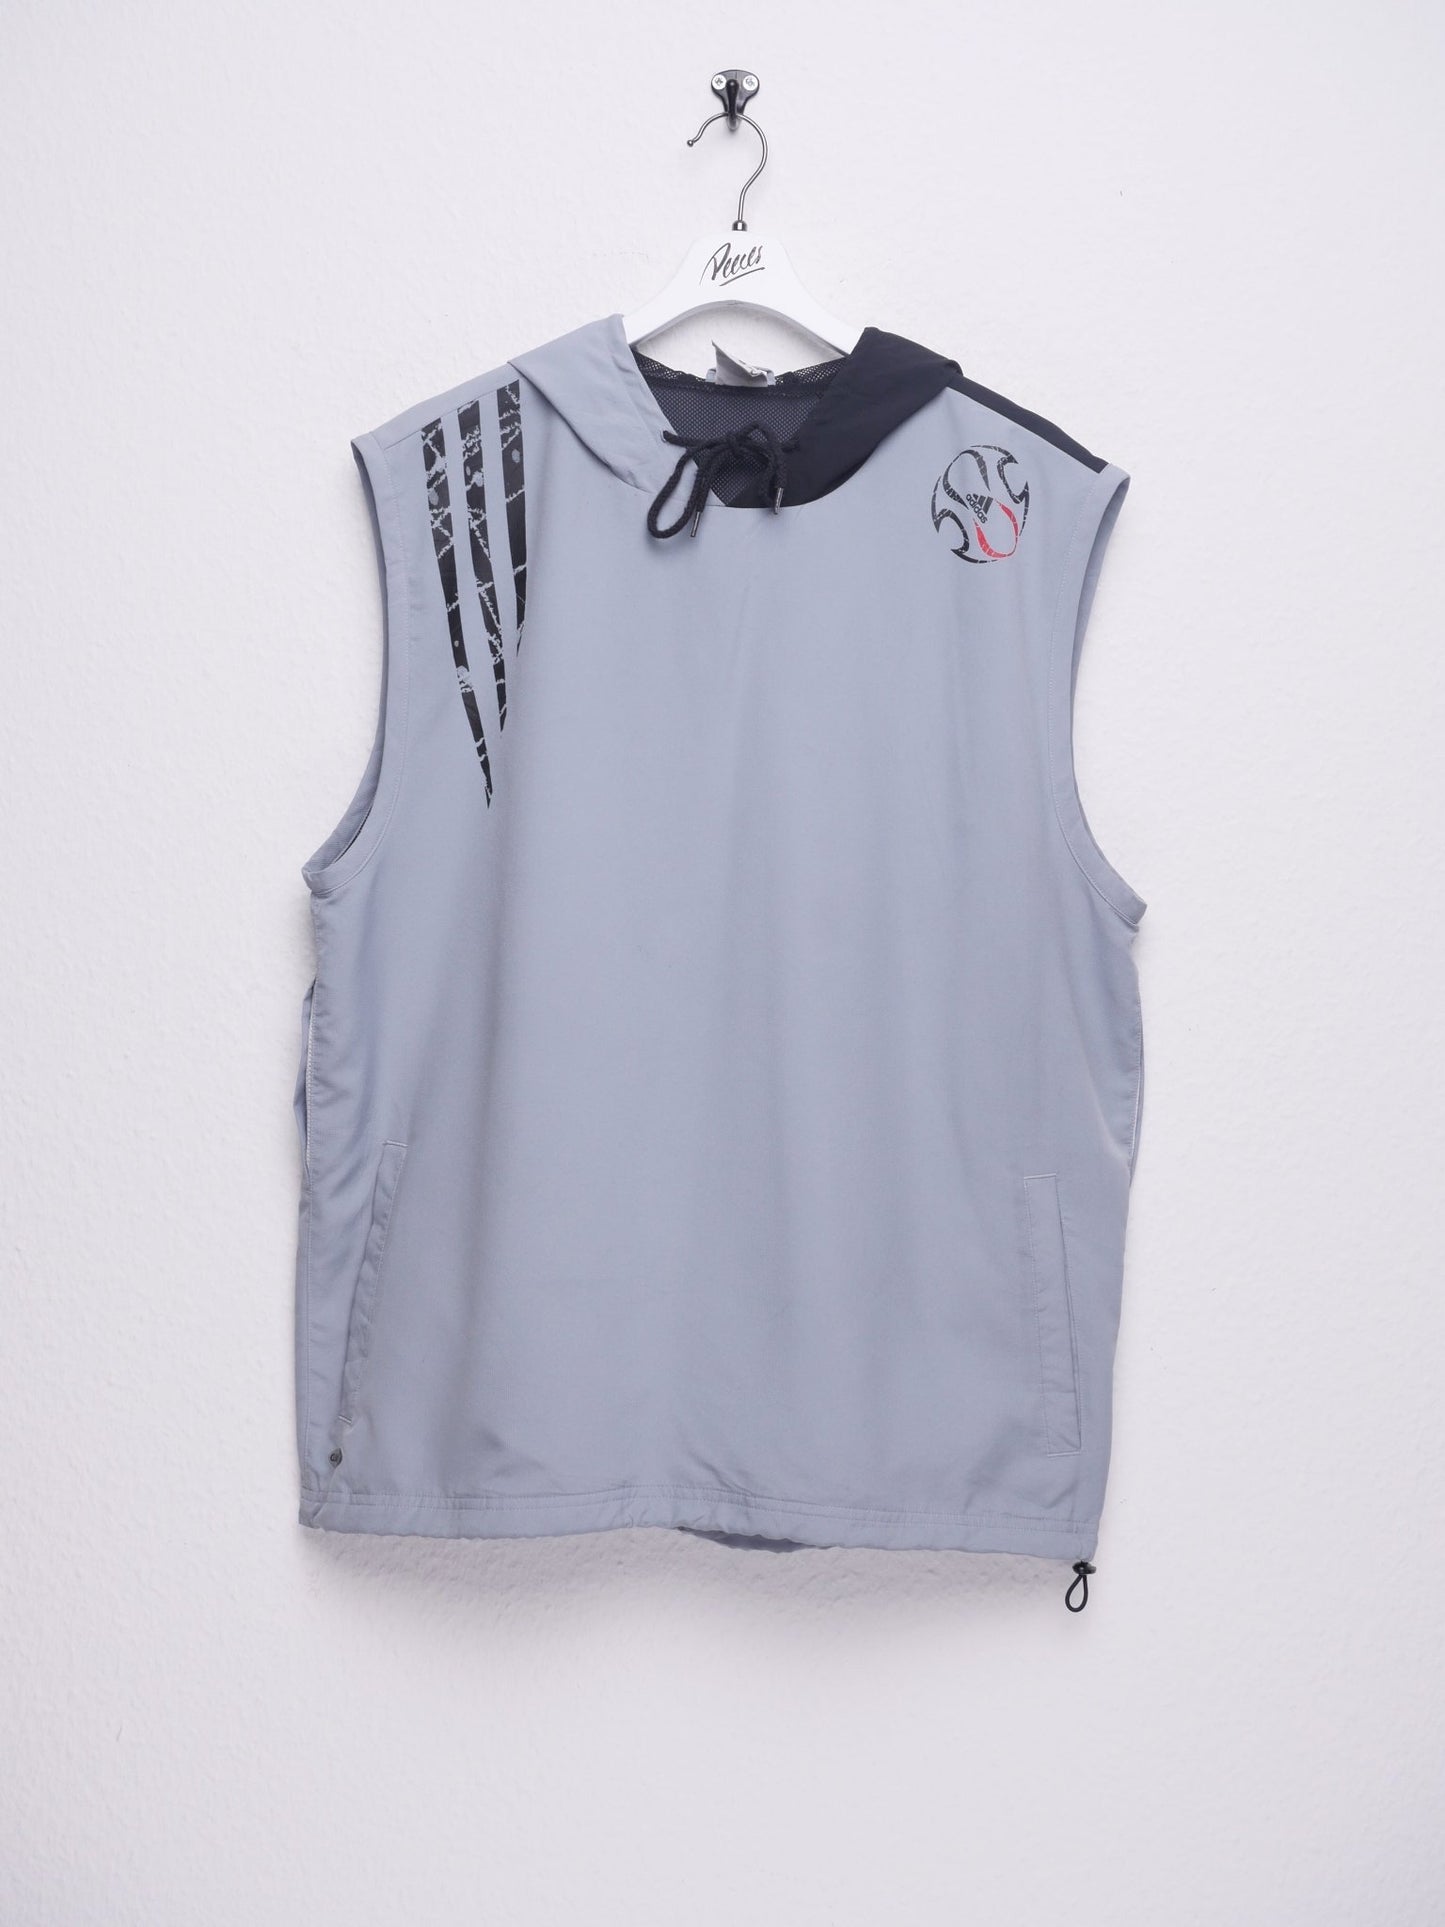 Adidas embroidered Logo Jersey sleeveless Hoodie - Peeces